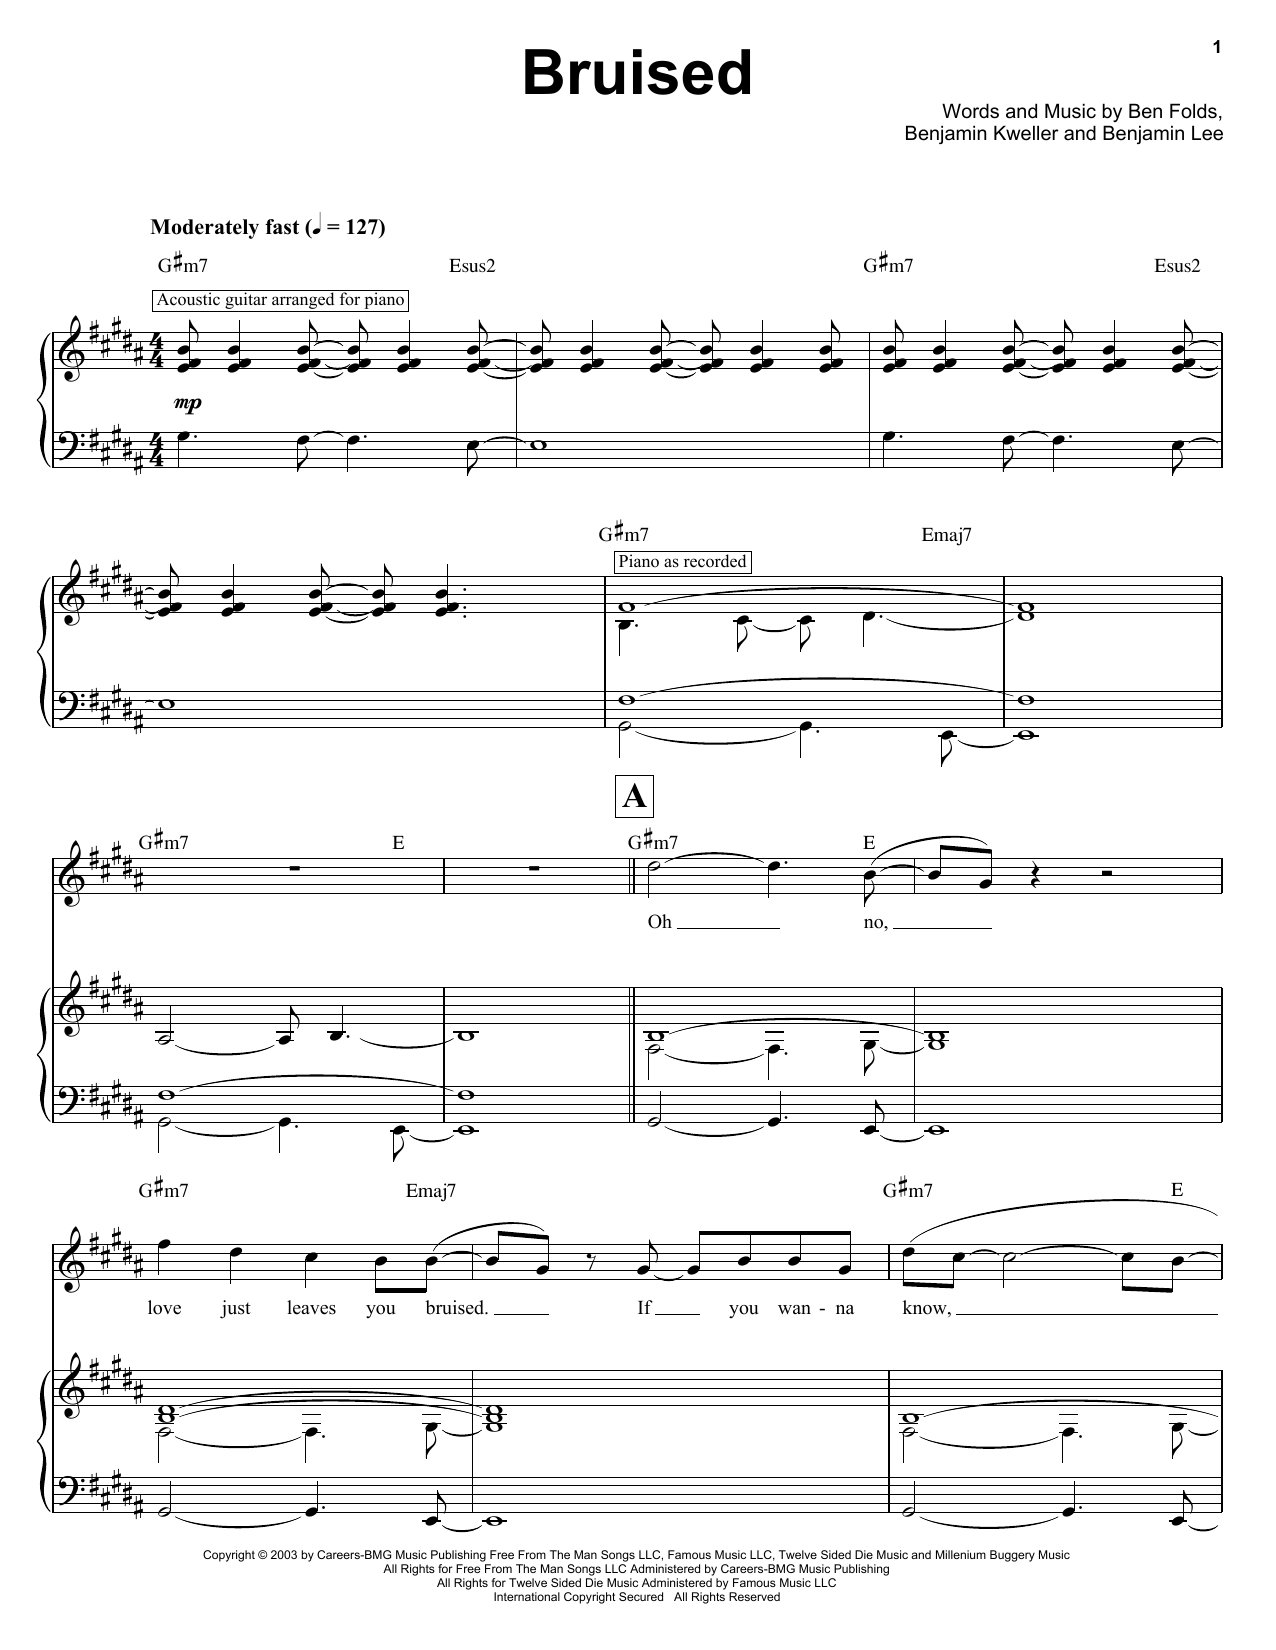 Ben Folds Bruised Sheet Music Notes & Chords for Keyboard Transcription - Download or Print PDF